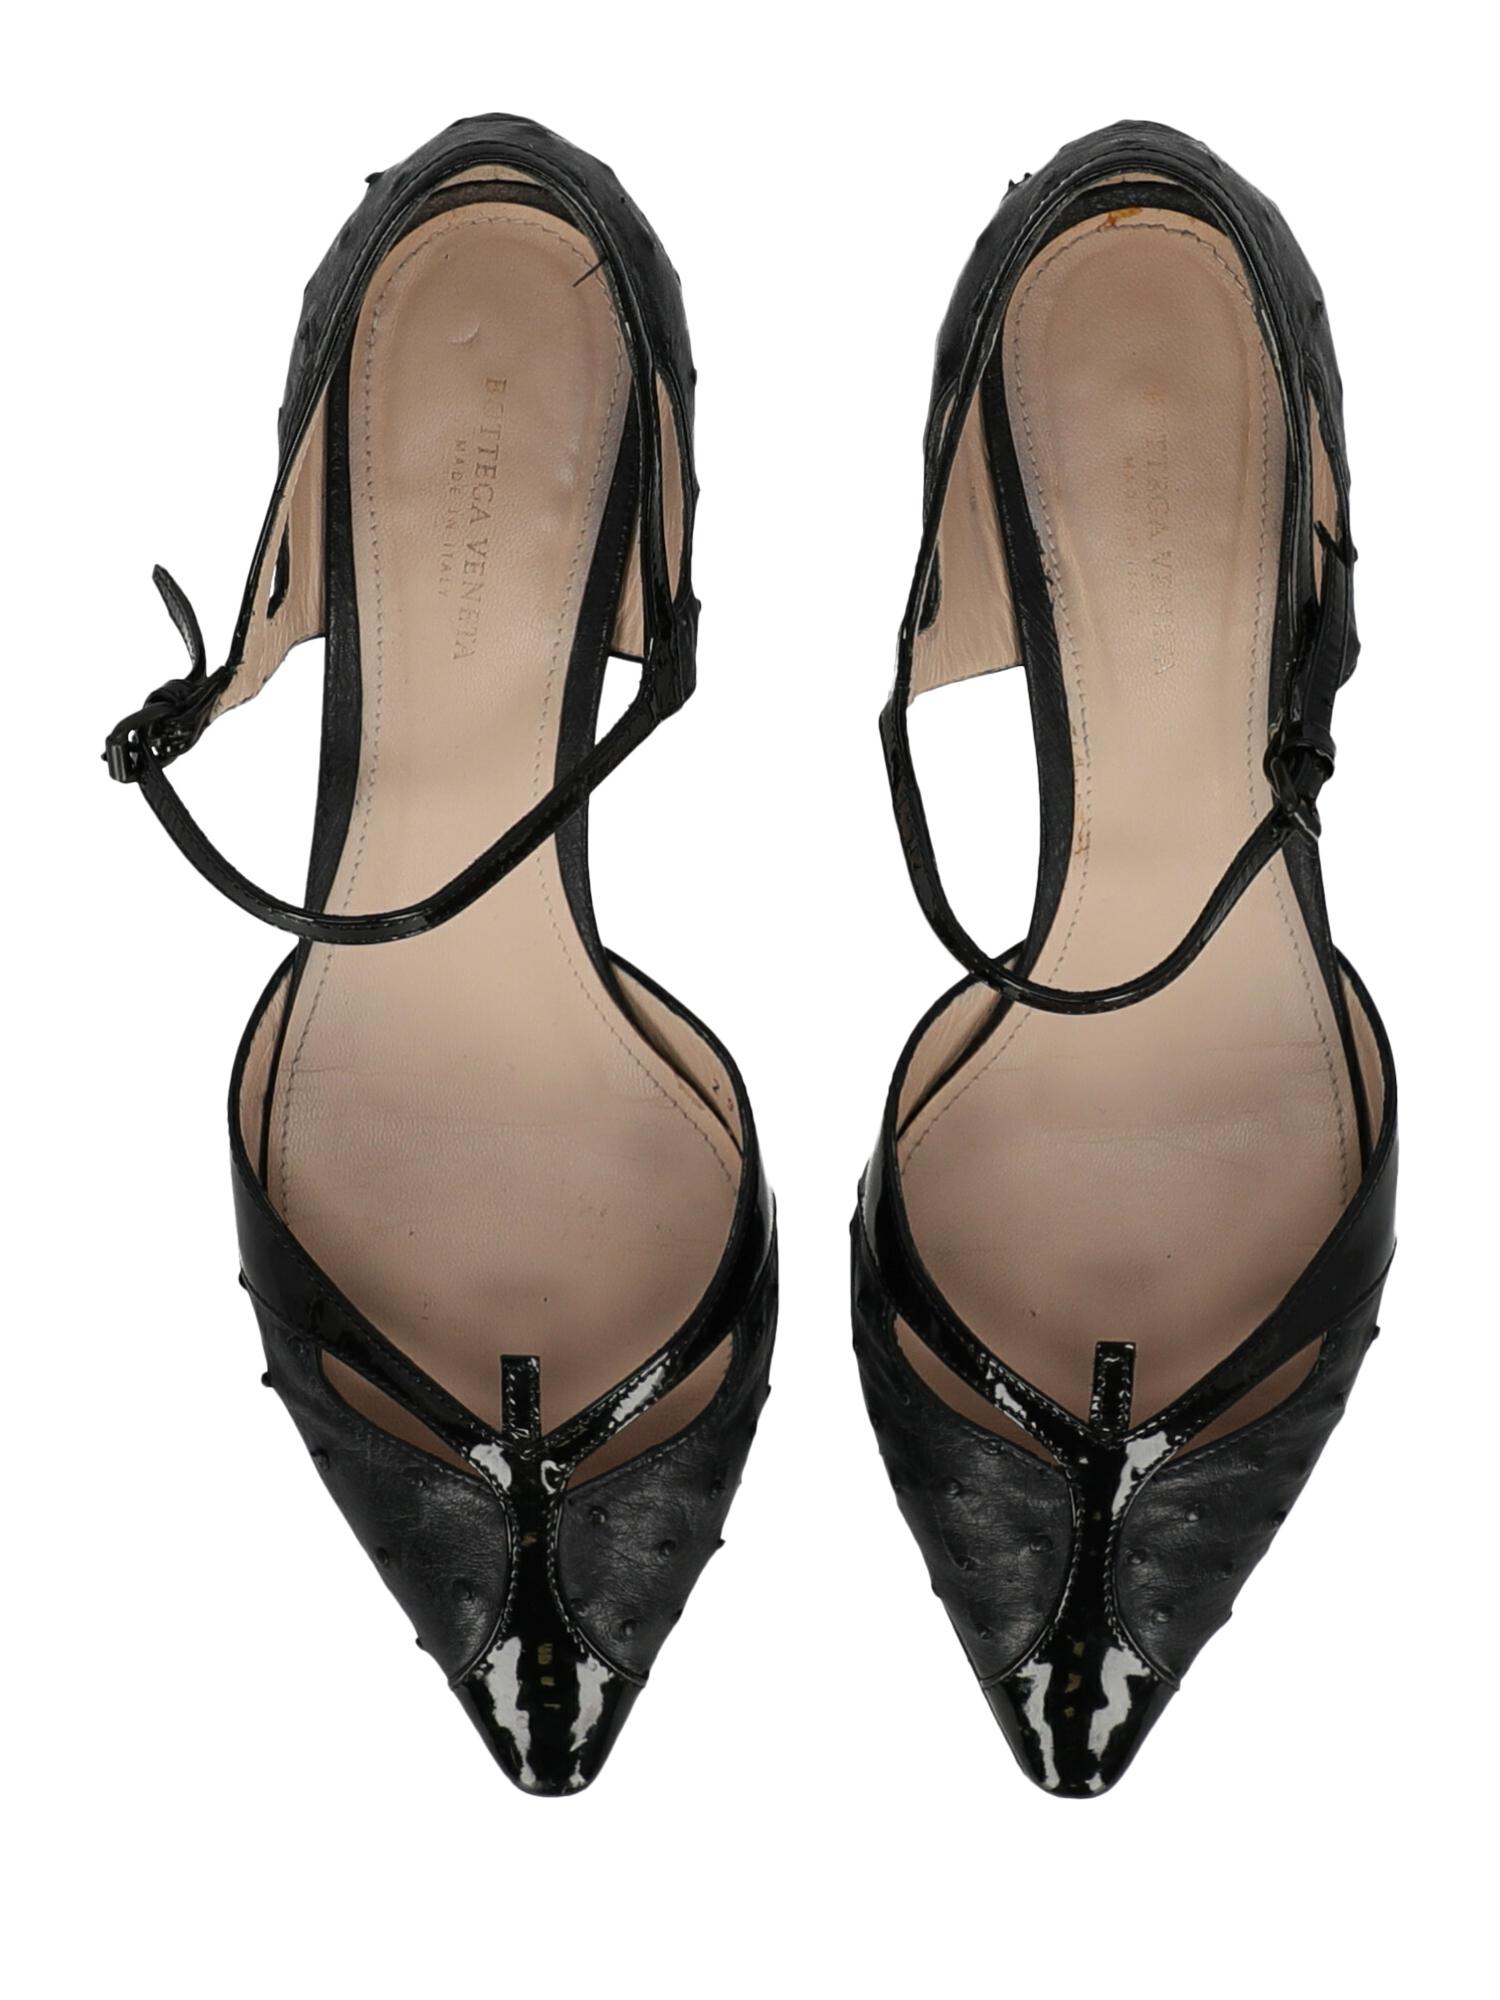 Bottega Veneta Woman Shoes Pumps Black Leather EU 37 1